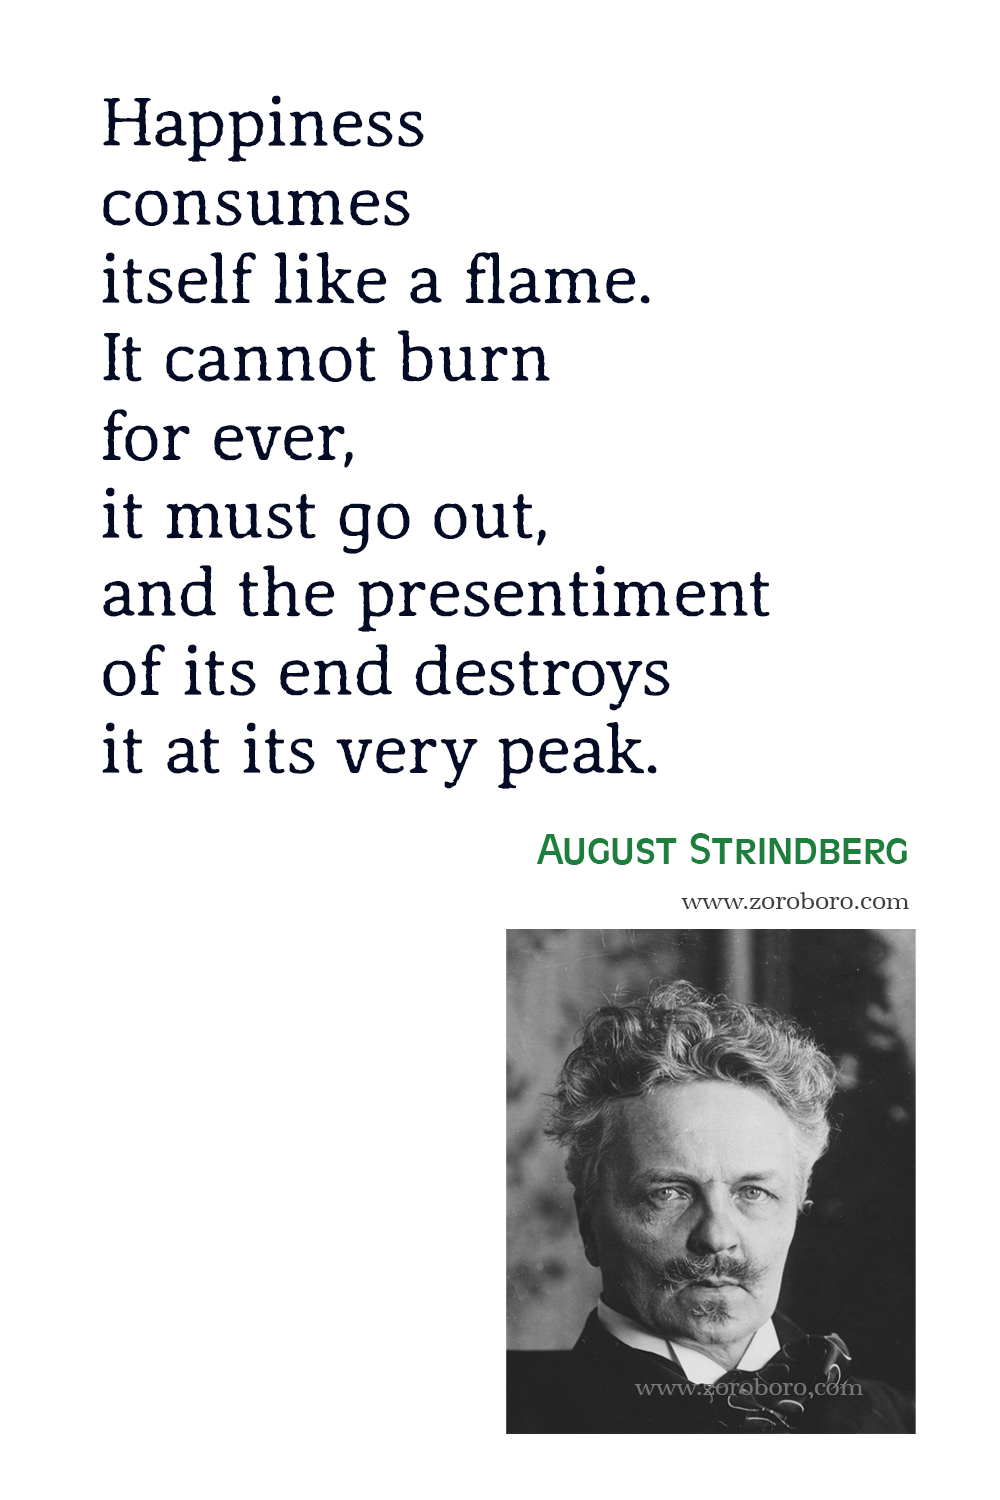 August Strindberg Quotes, August Strindberg, Married, The Cloister, Plays, August Strindberg The Father Quotes, August Strindberg Books Quotes